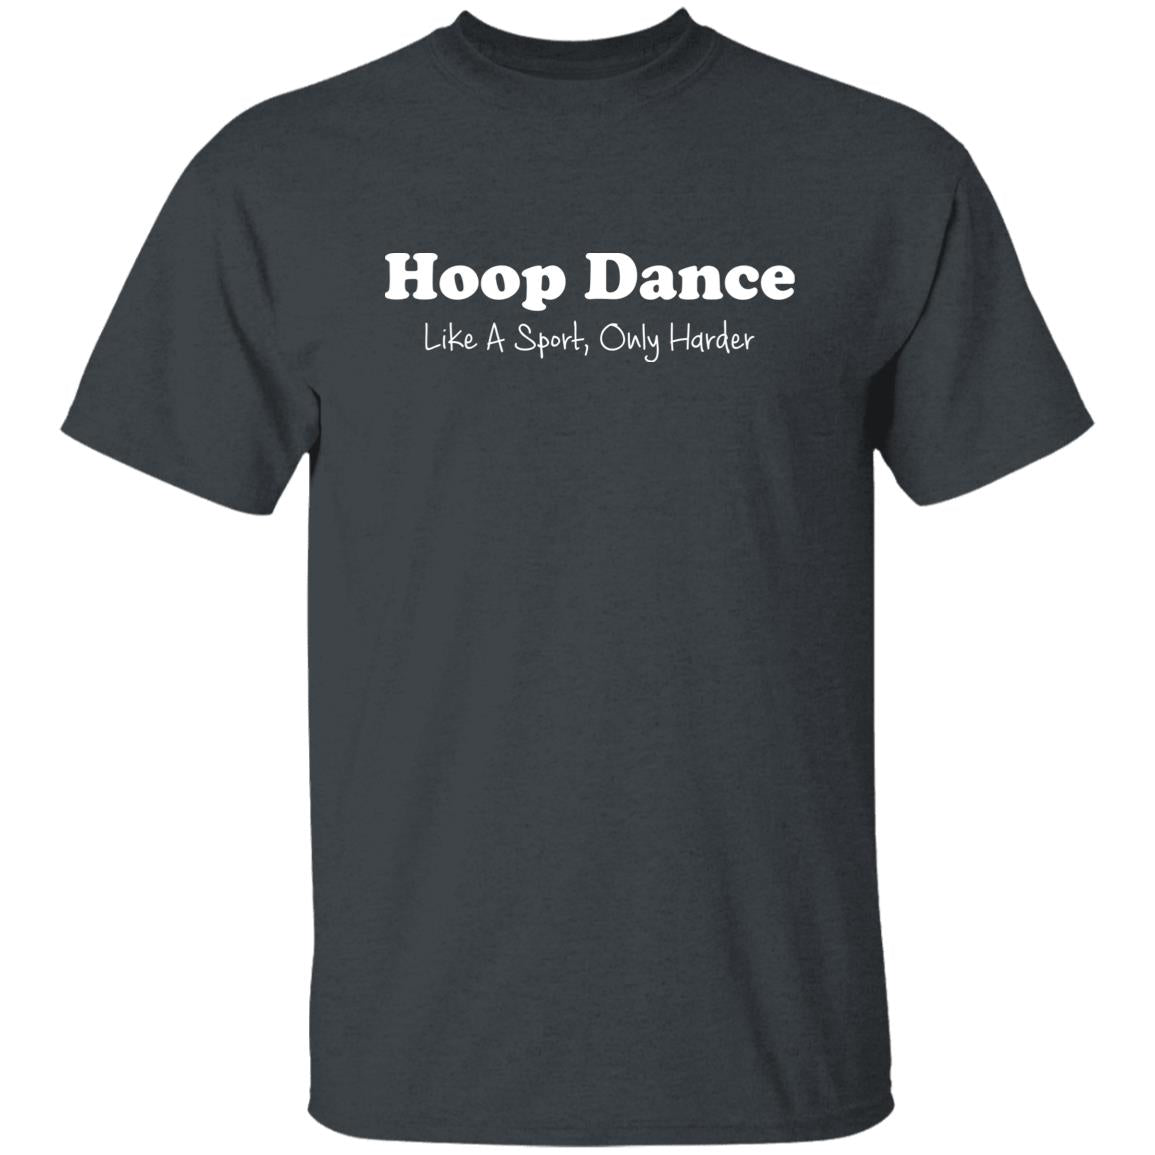 Hoop Dance like a sport only harder Unisex Shirt S-2XL Dark Heather-Dark Heather-Family-Gift-Planet